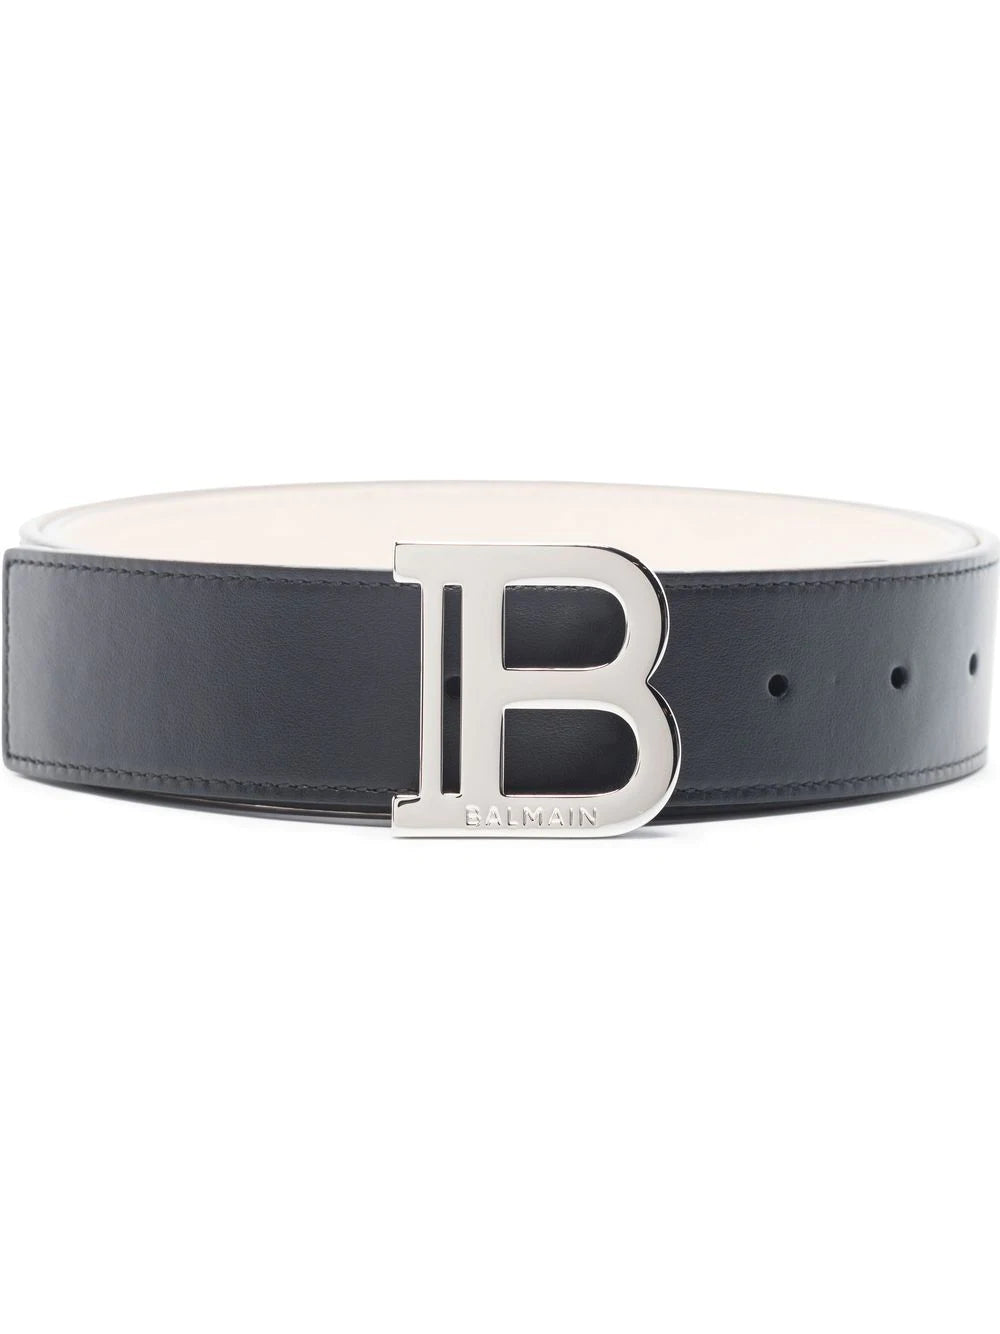 BALMAIN MEN B Logo Buckle 3.5 Belt Black/Silver - MAISONDEFASHION.COM